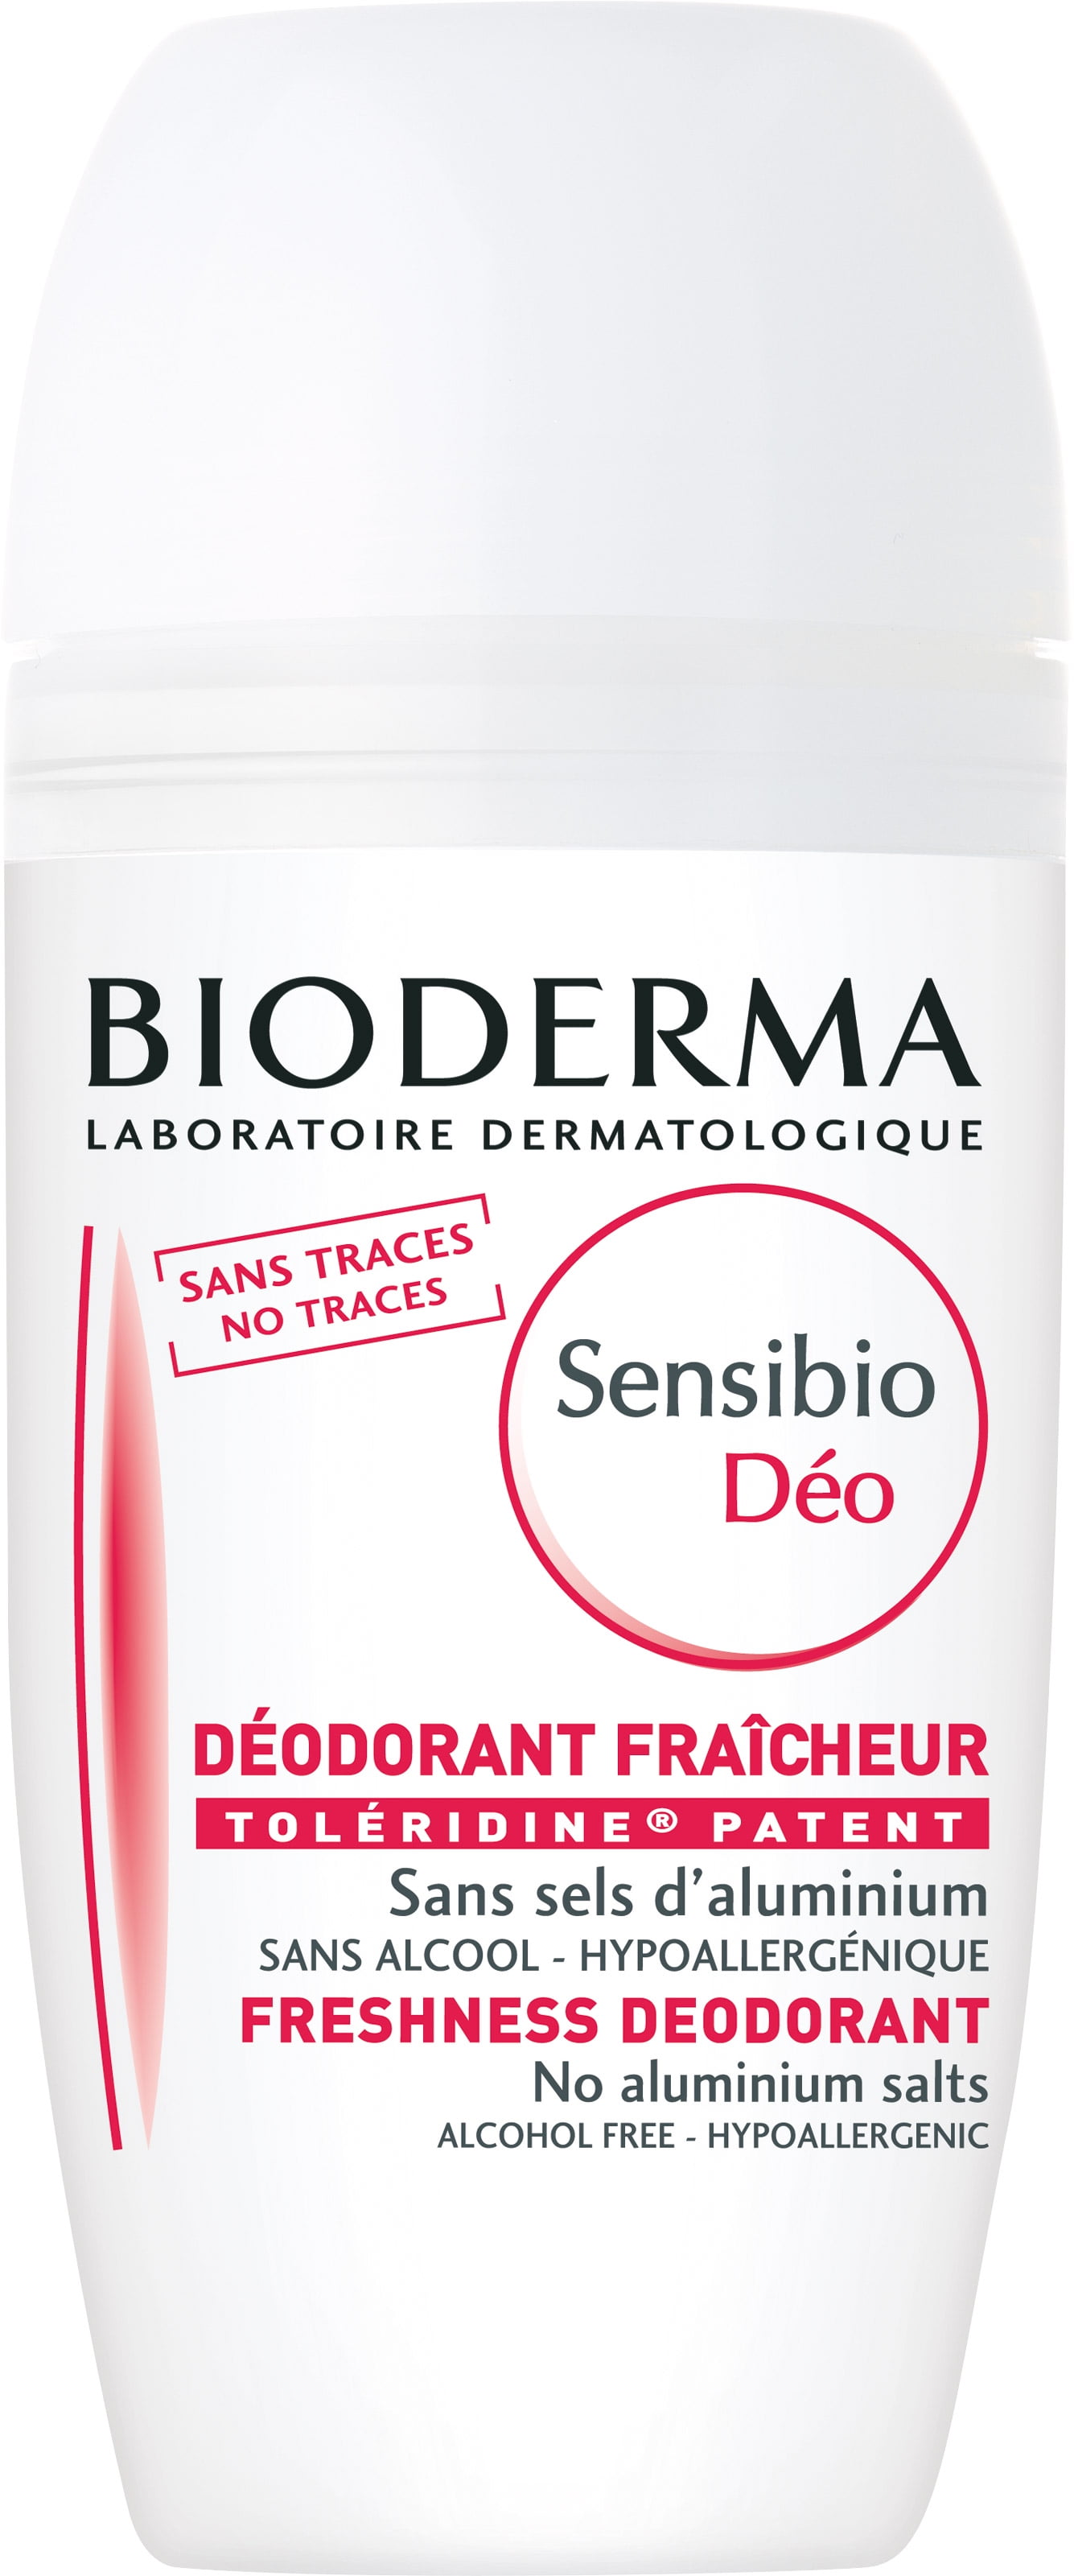 Ochtend gymnastiek suspensie lid Bioderma Sensibio Freshness Deodorant for Sensitive Skin - 1.67 fl oz -  Walmart.com